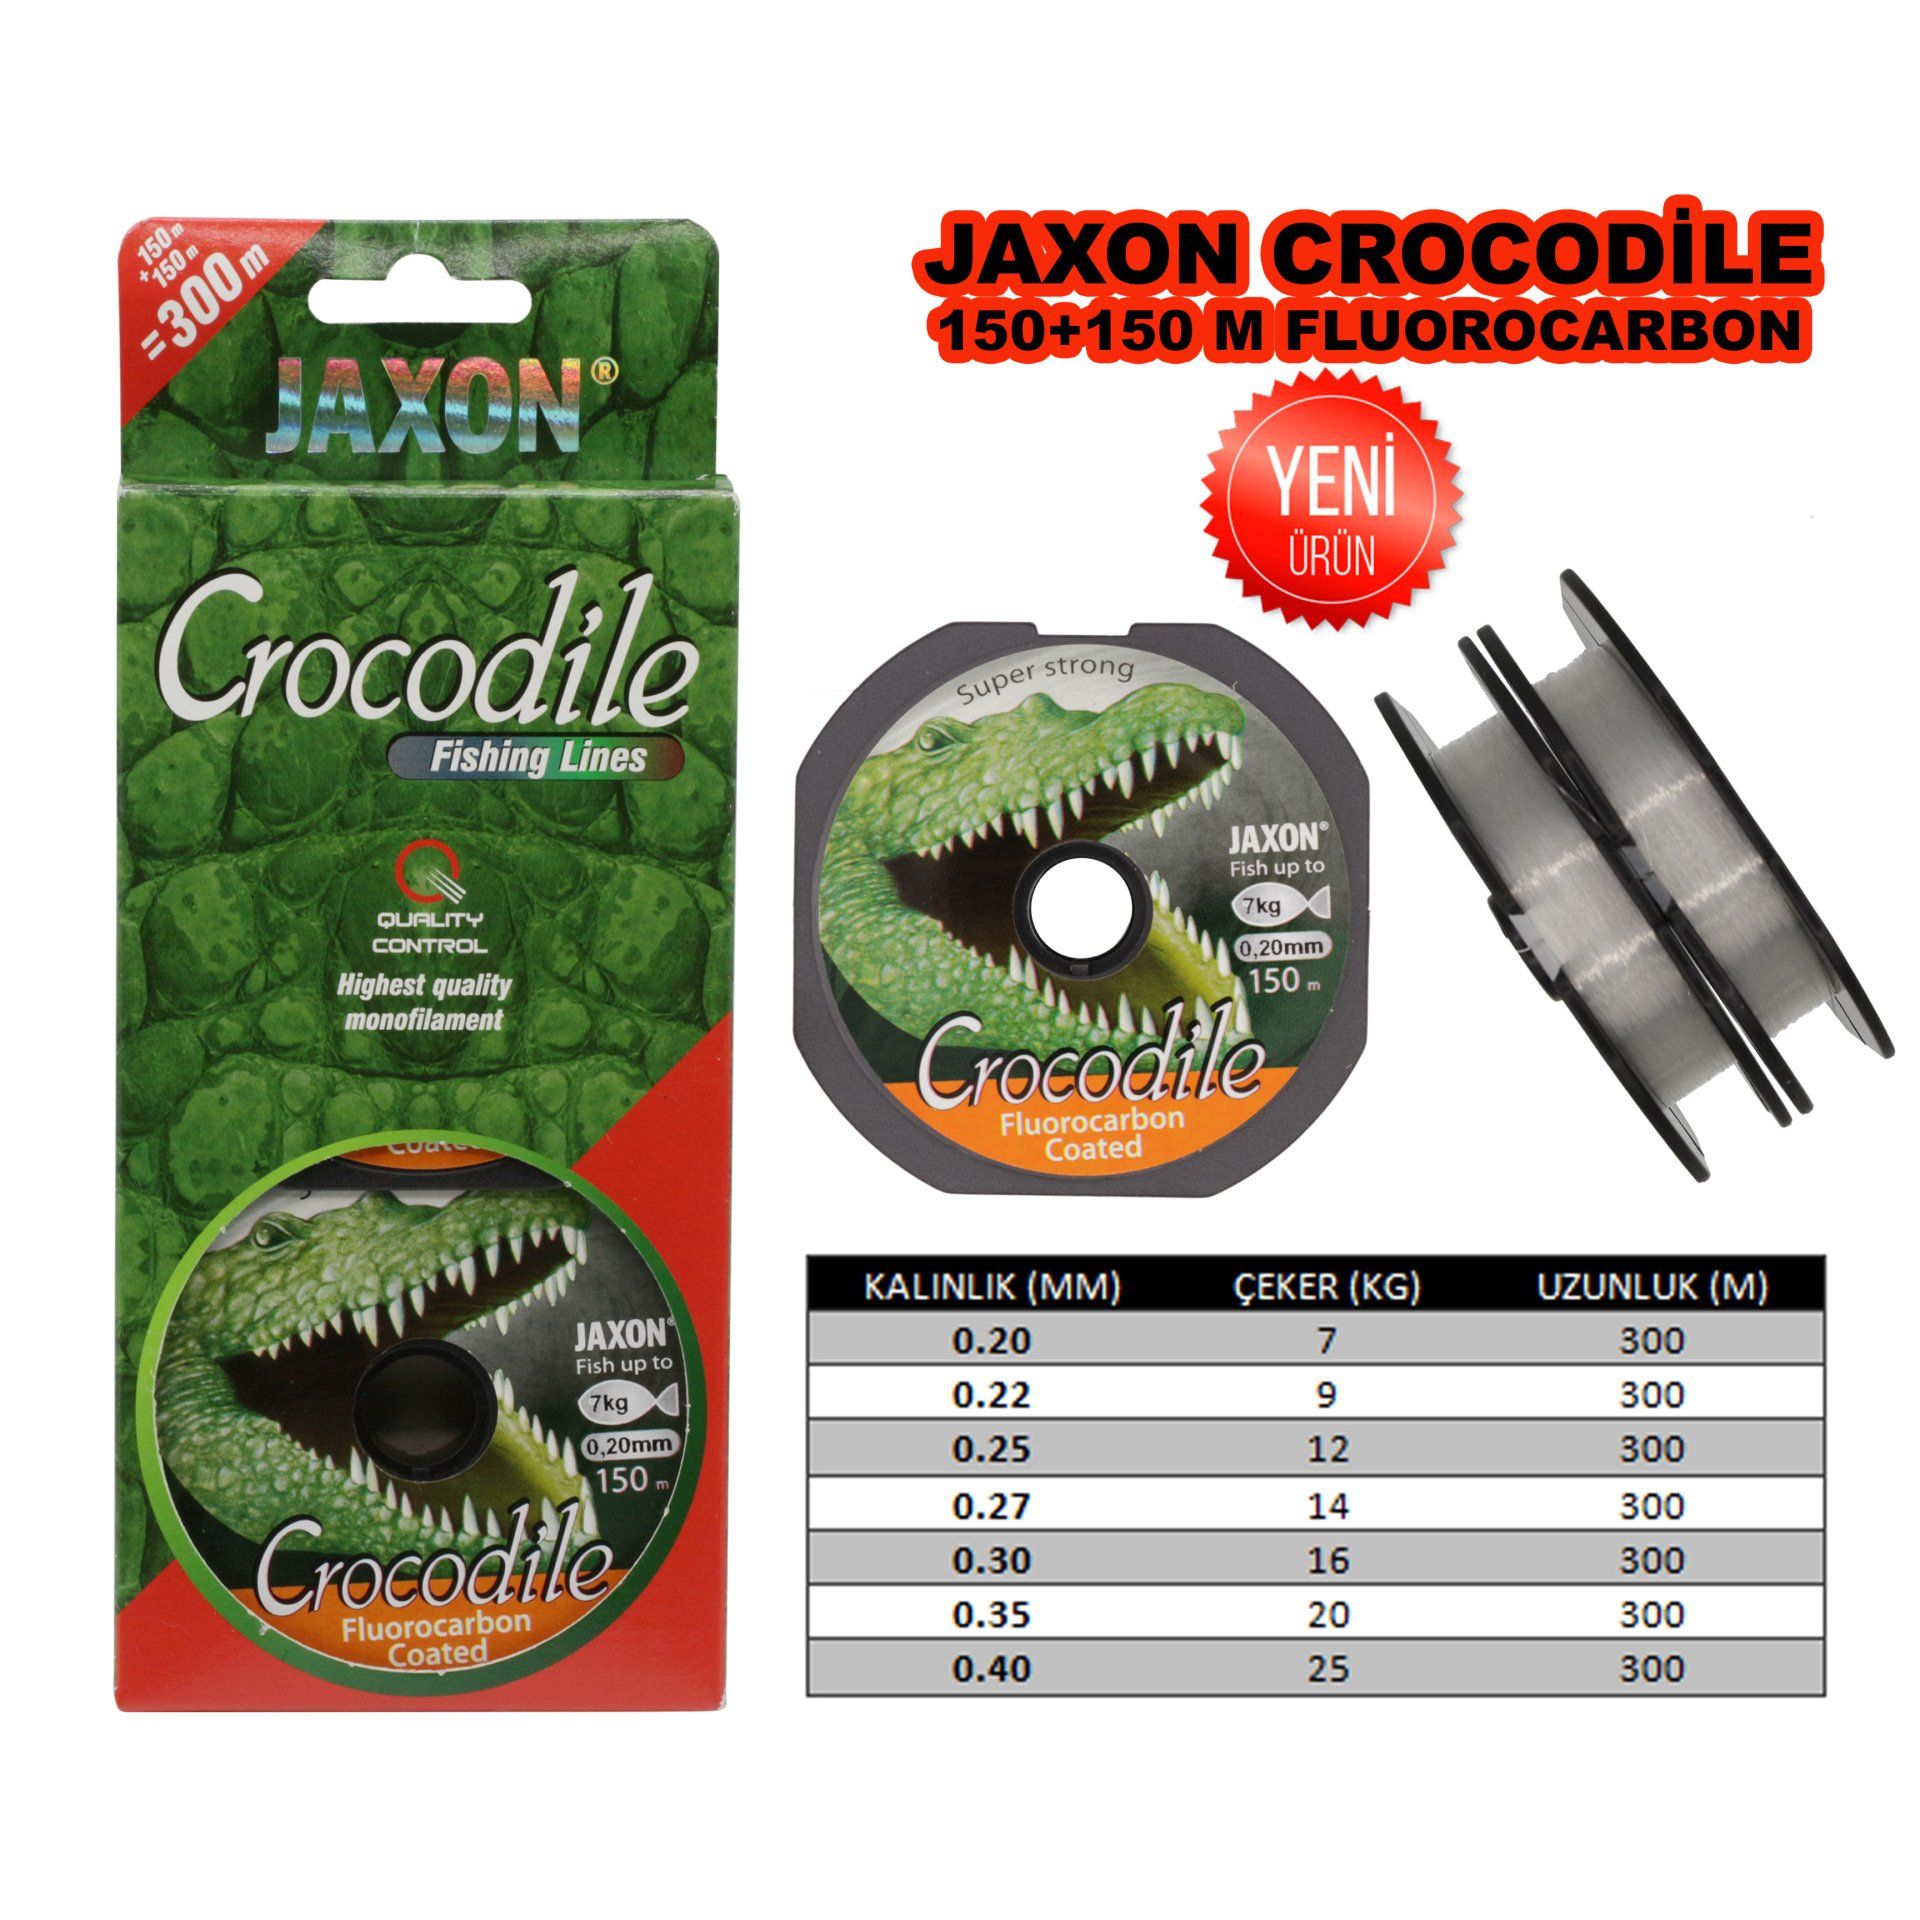 Jaxon Crocodile Fluocarbon 150+150Mt.